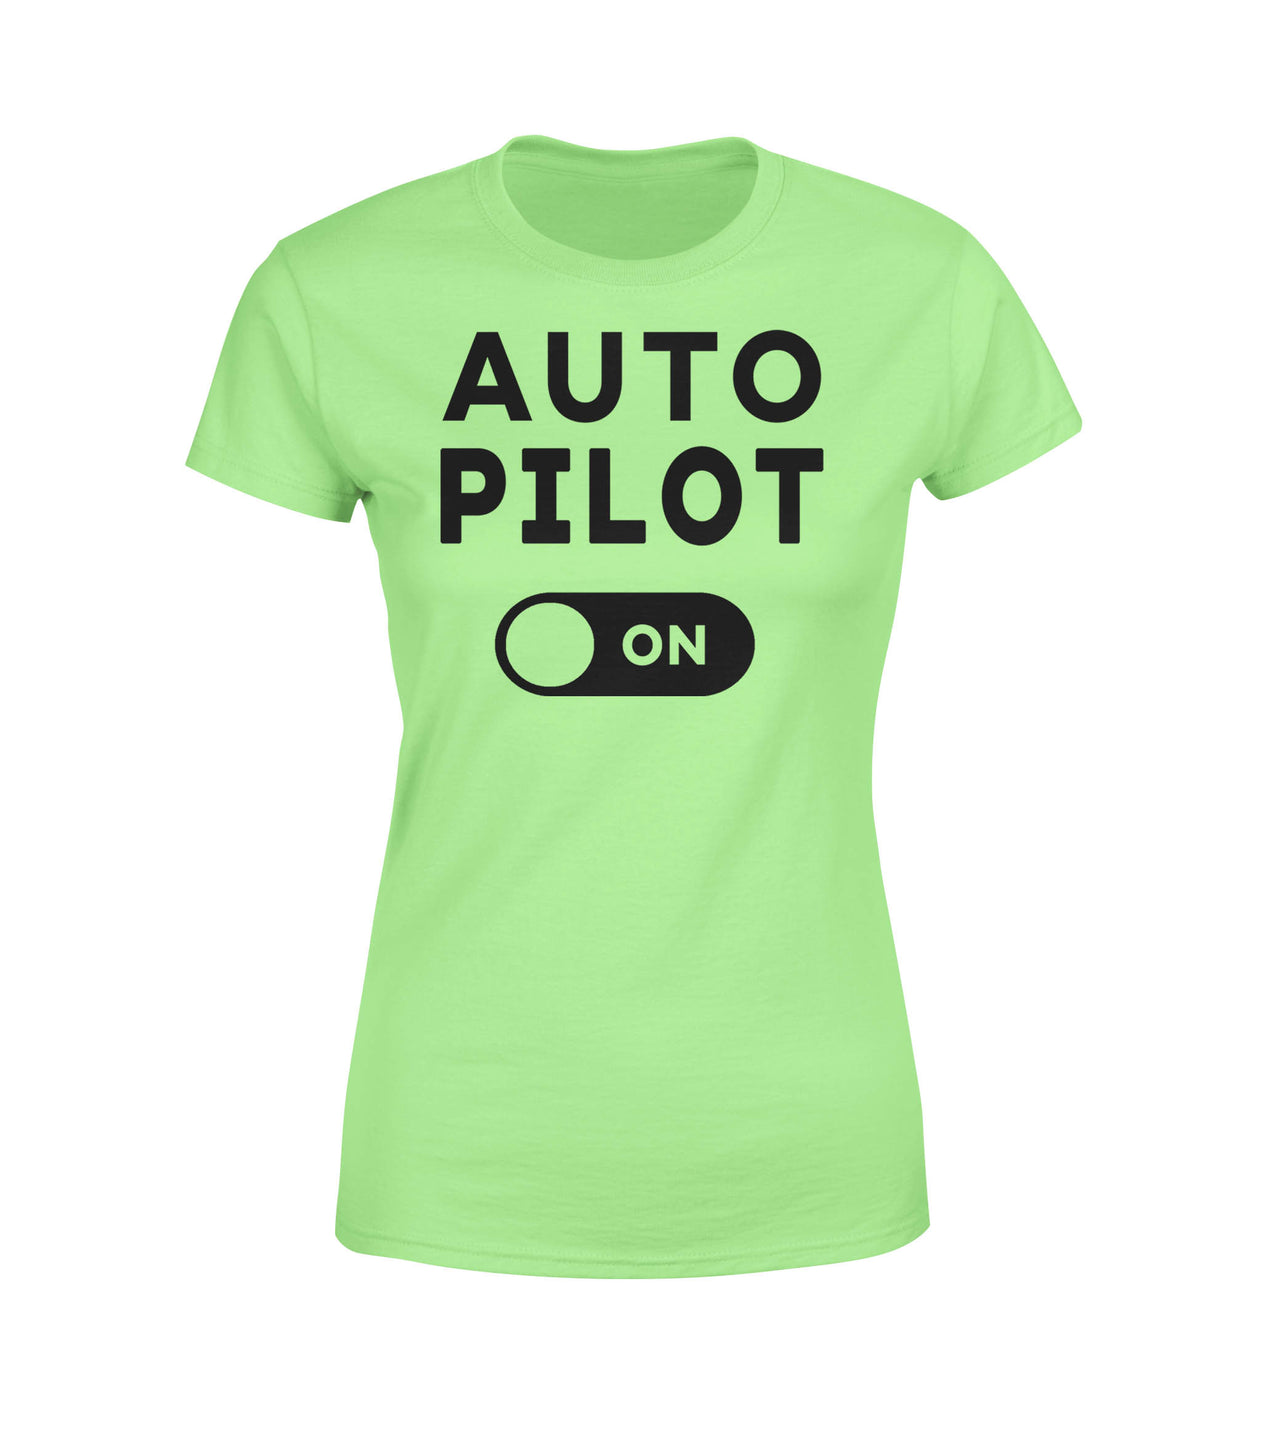 Auto Pilot ON Designed Women T-Shirts